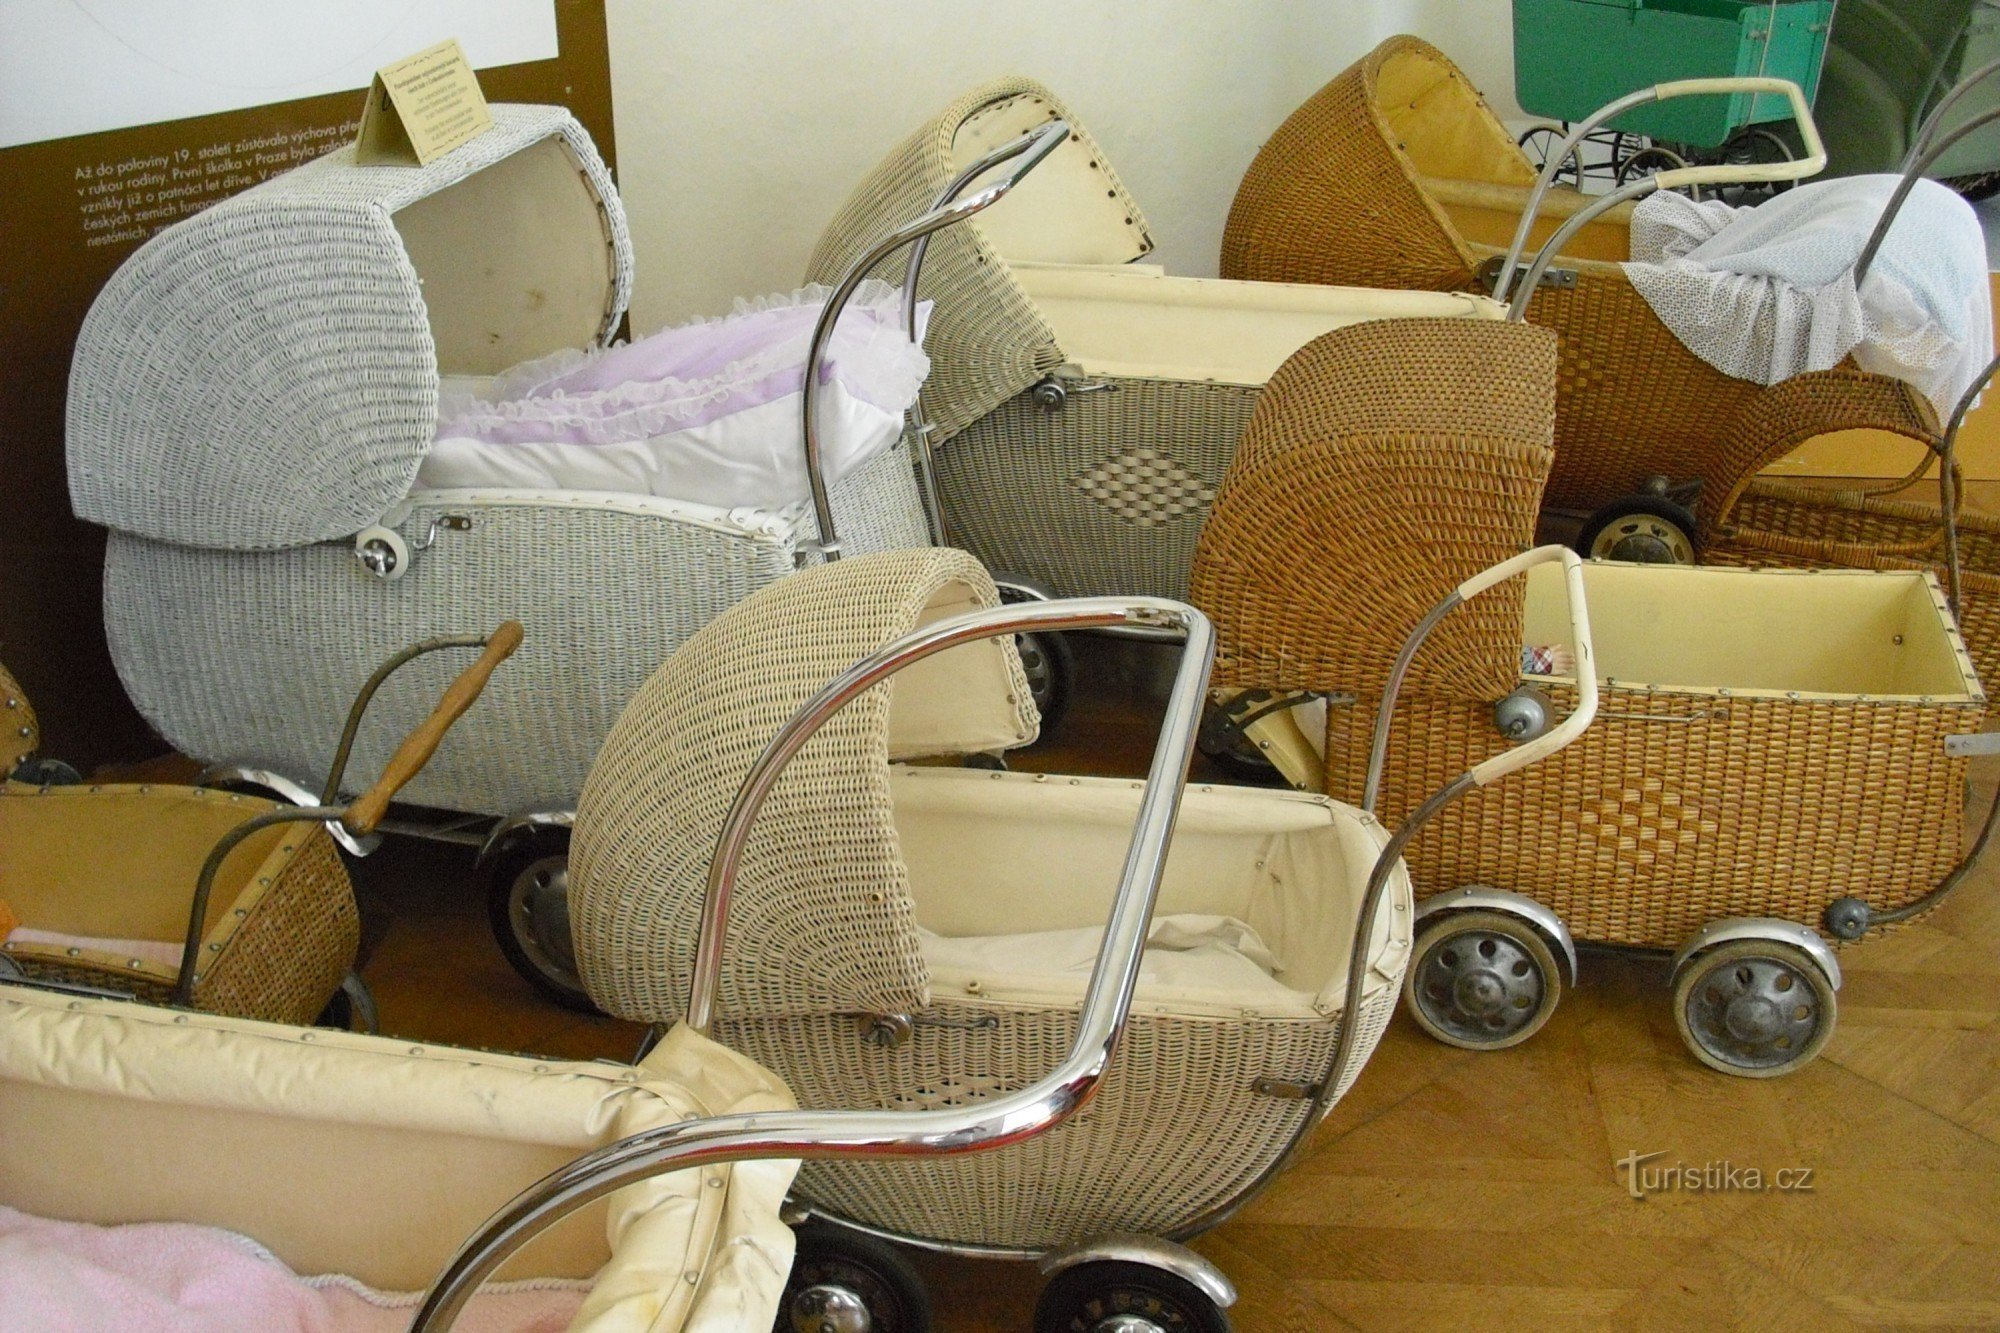 Hané square - stroller exhibition